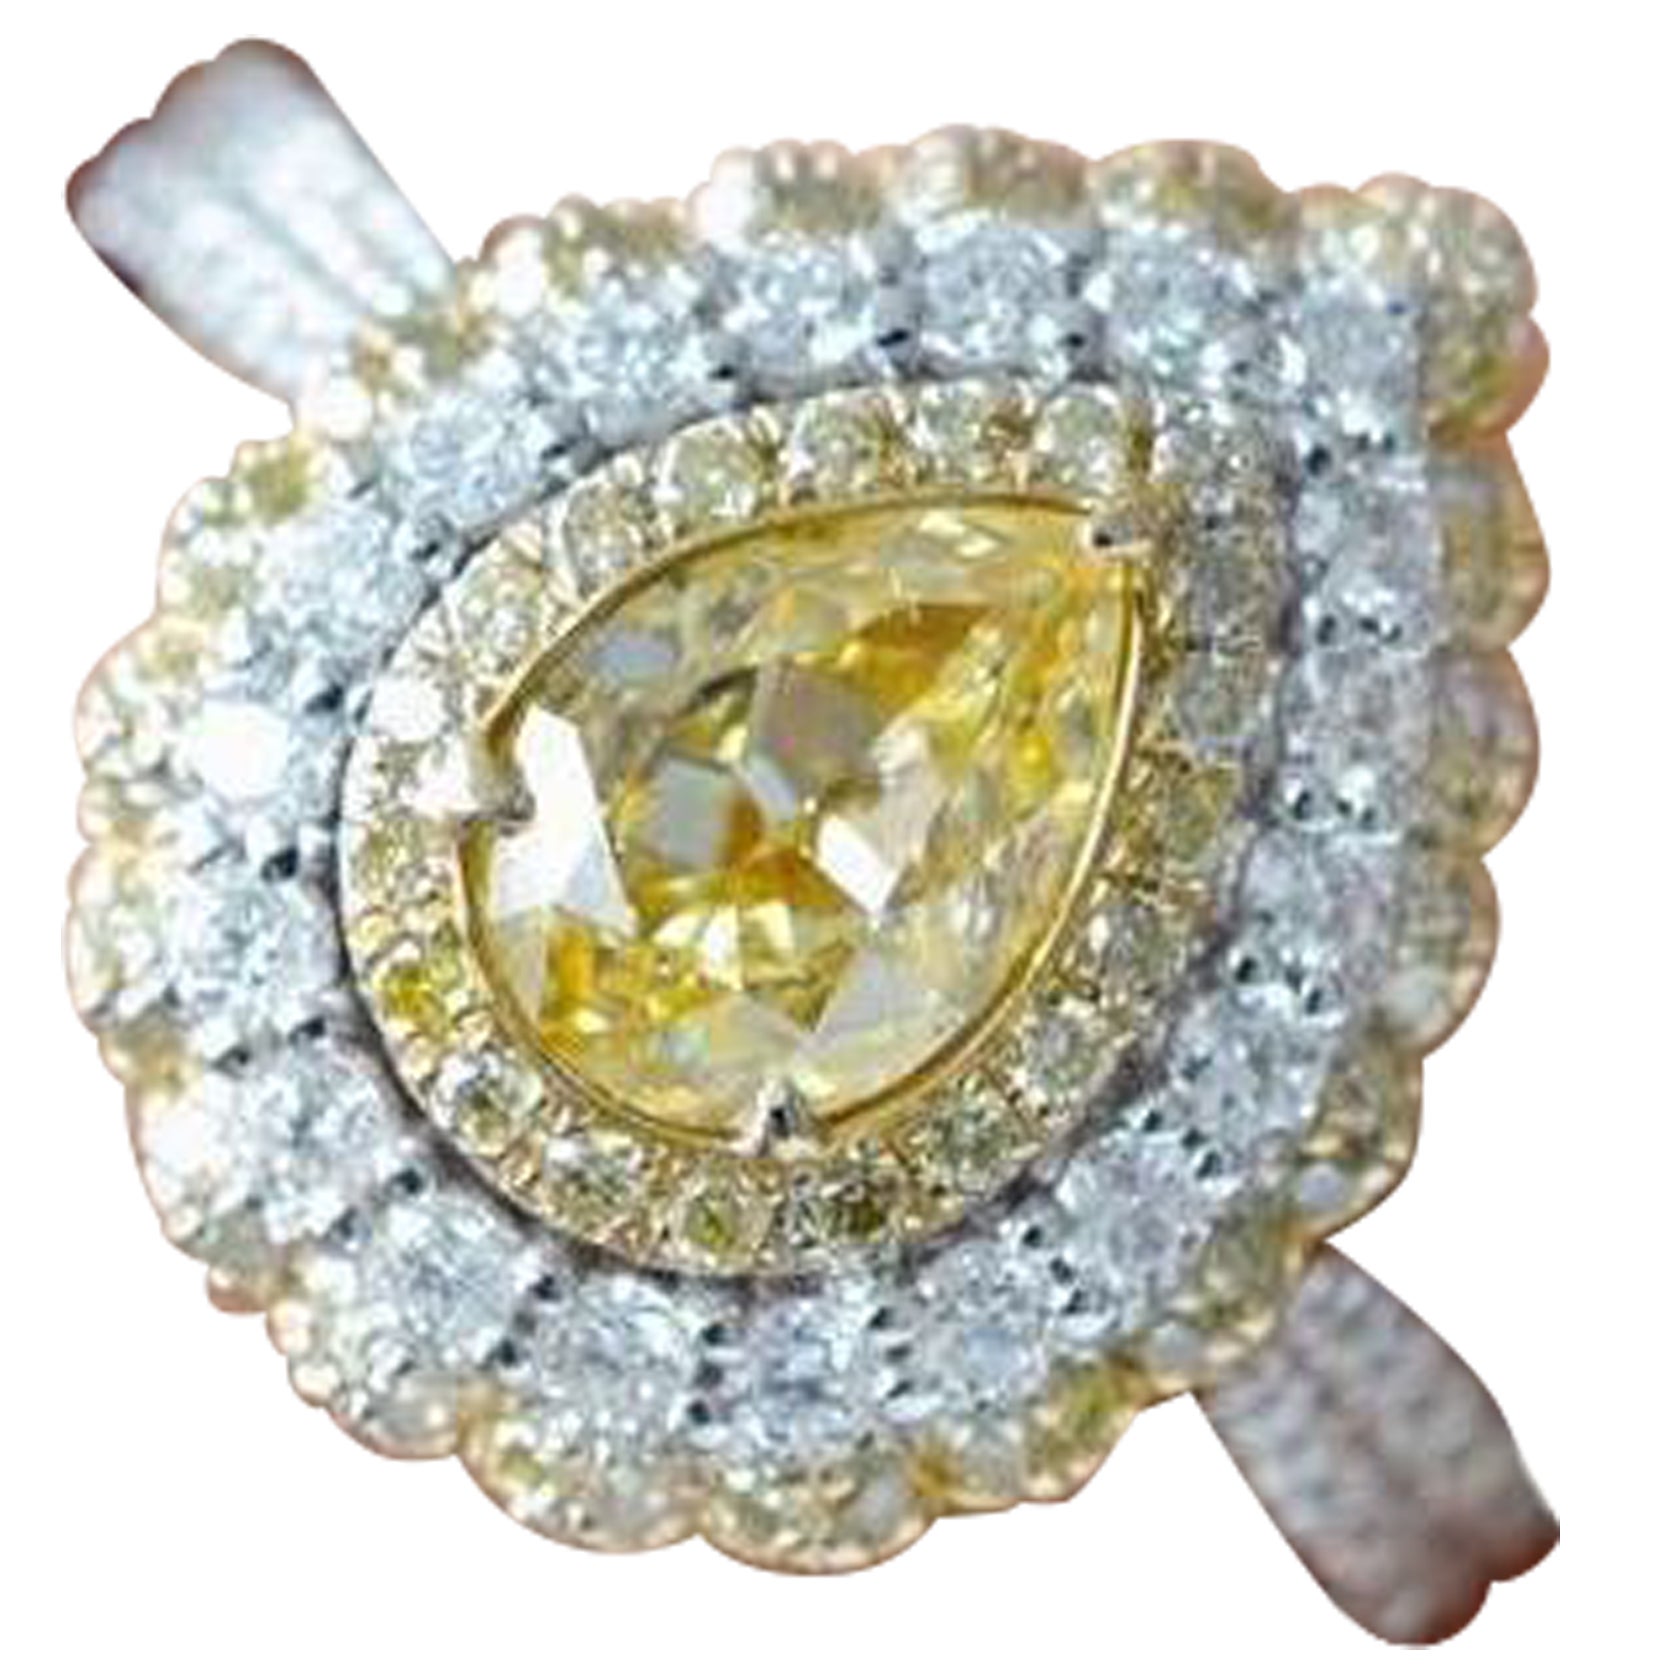 0.68 Carat Fancy Light Yellow Diamond Ring VS2 Clarity GIA Certified